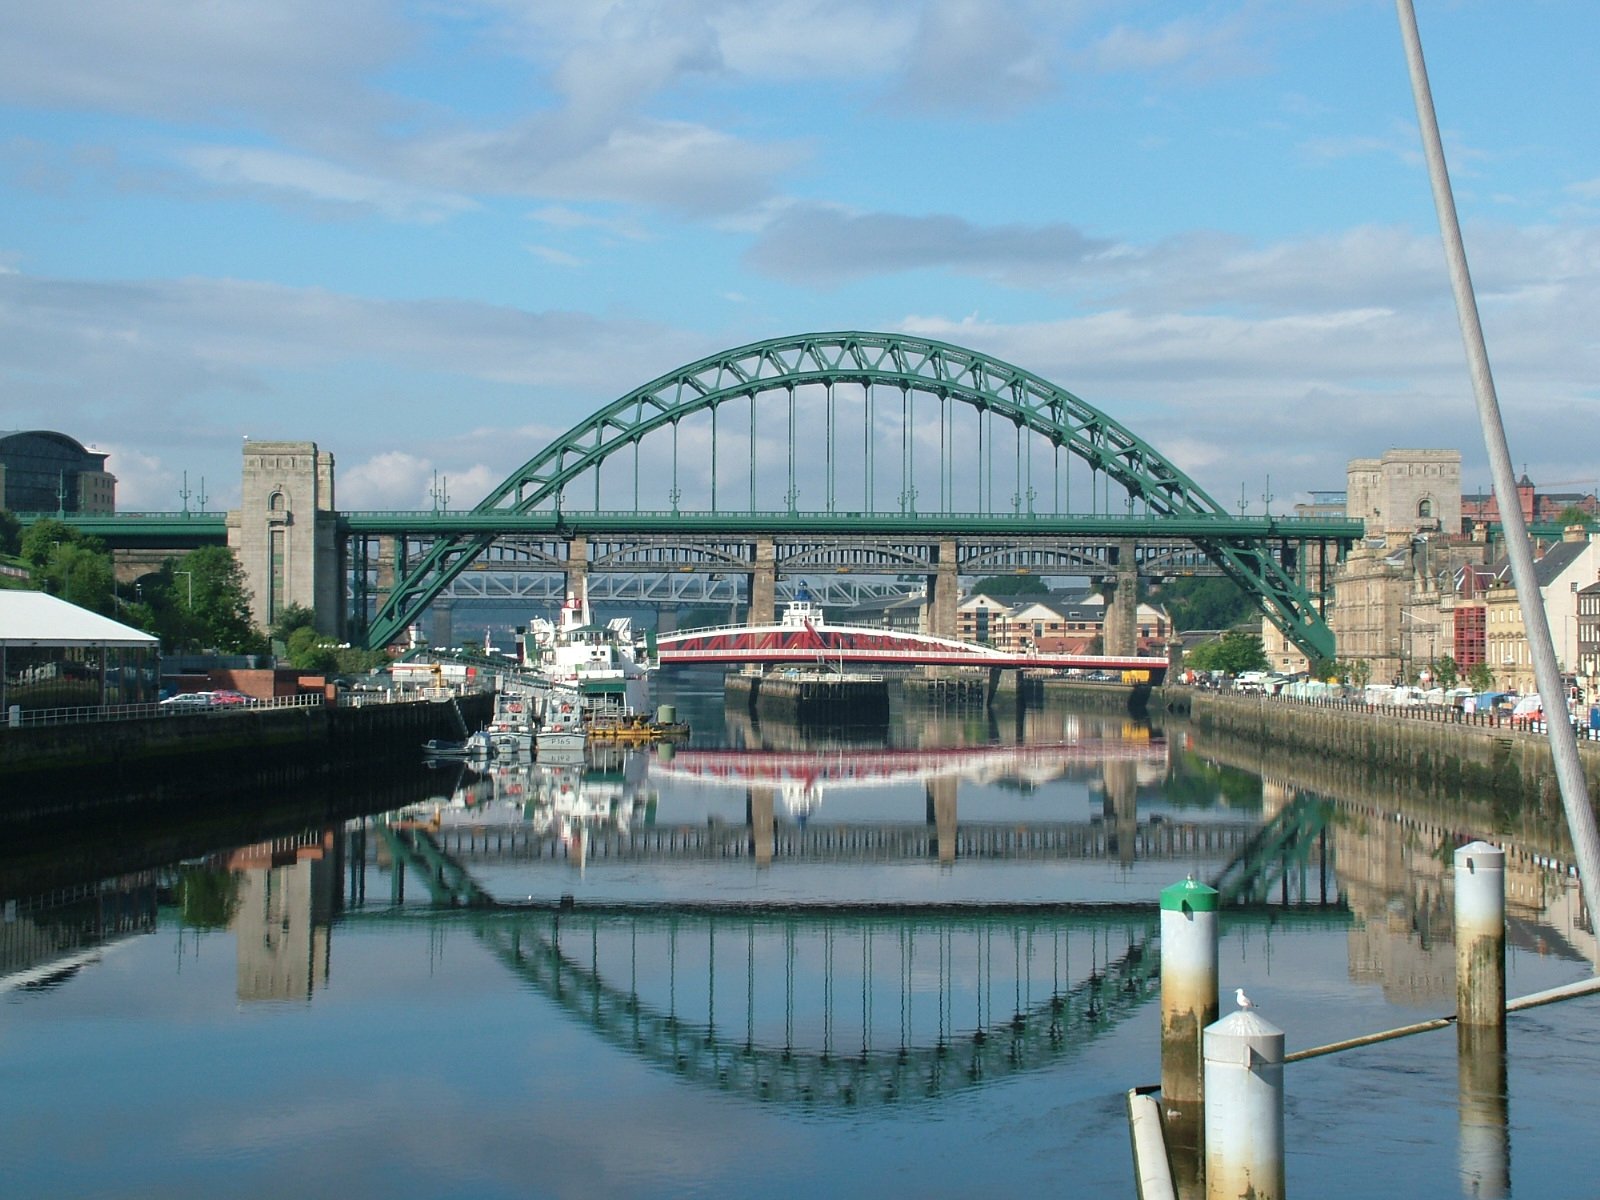 File:Tyne Bridge - Newcastle Upon Tyne - England - 2004-08-14.jpg